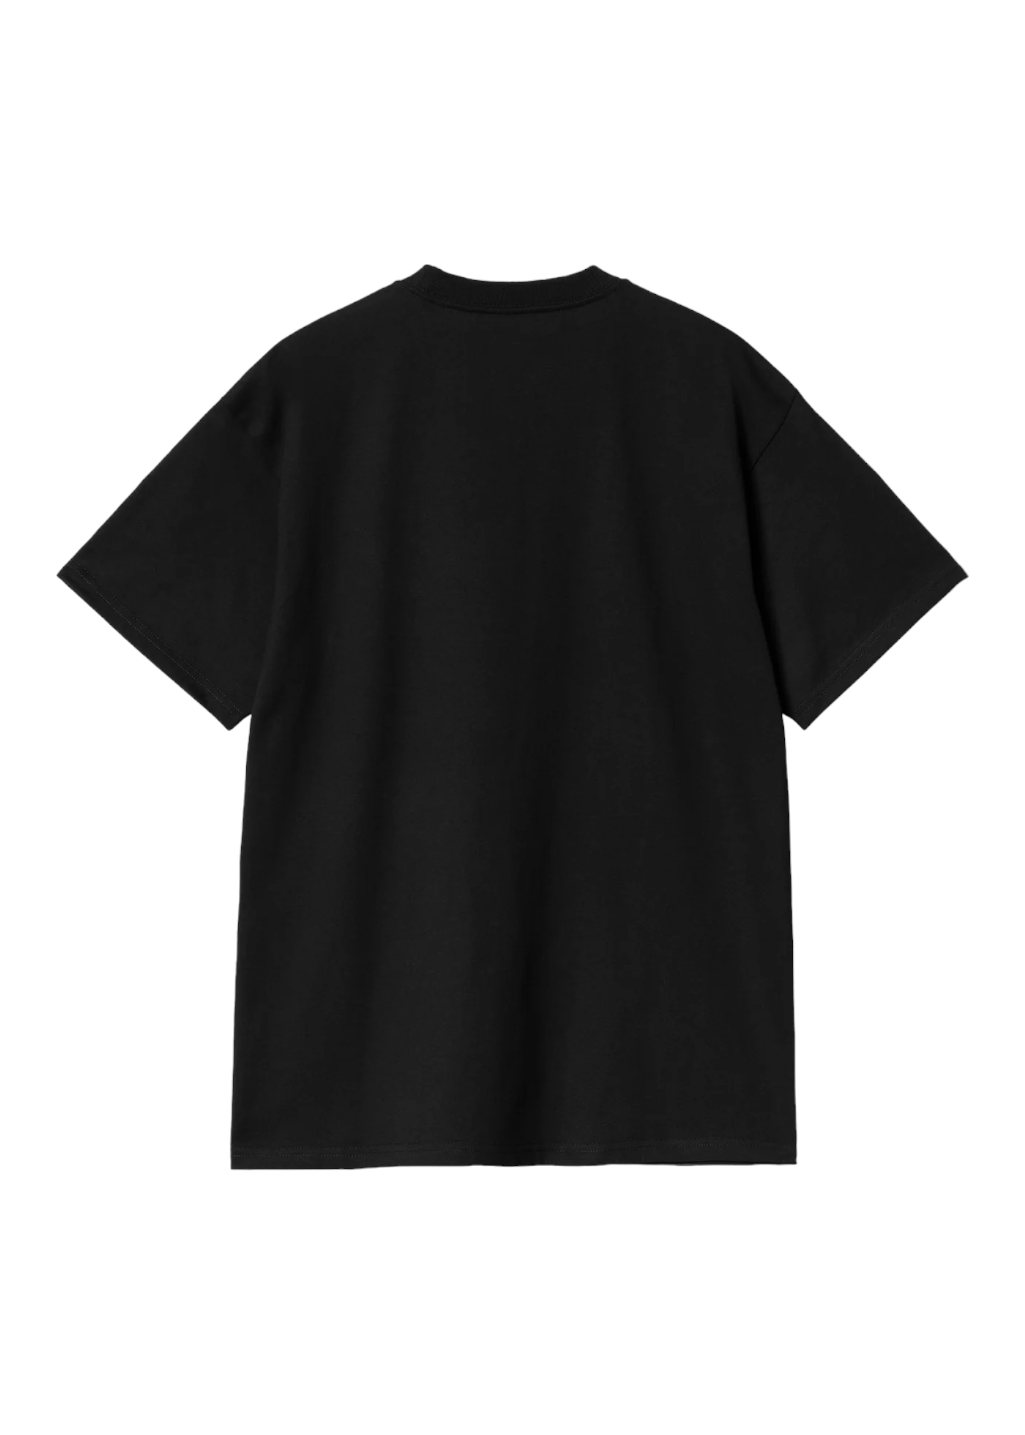 Carhartt WIP - S/S Icons T-Shirt - Black/White - Hardpressed Print Studio Inc.